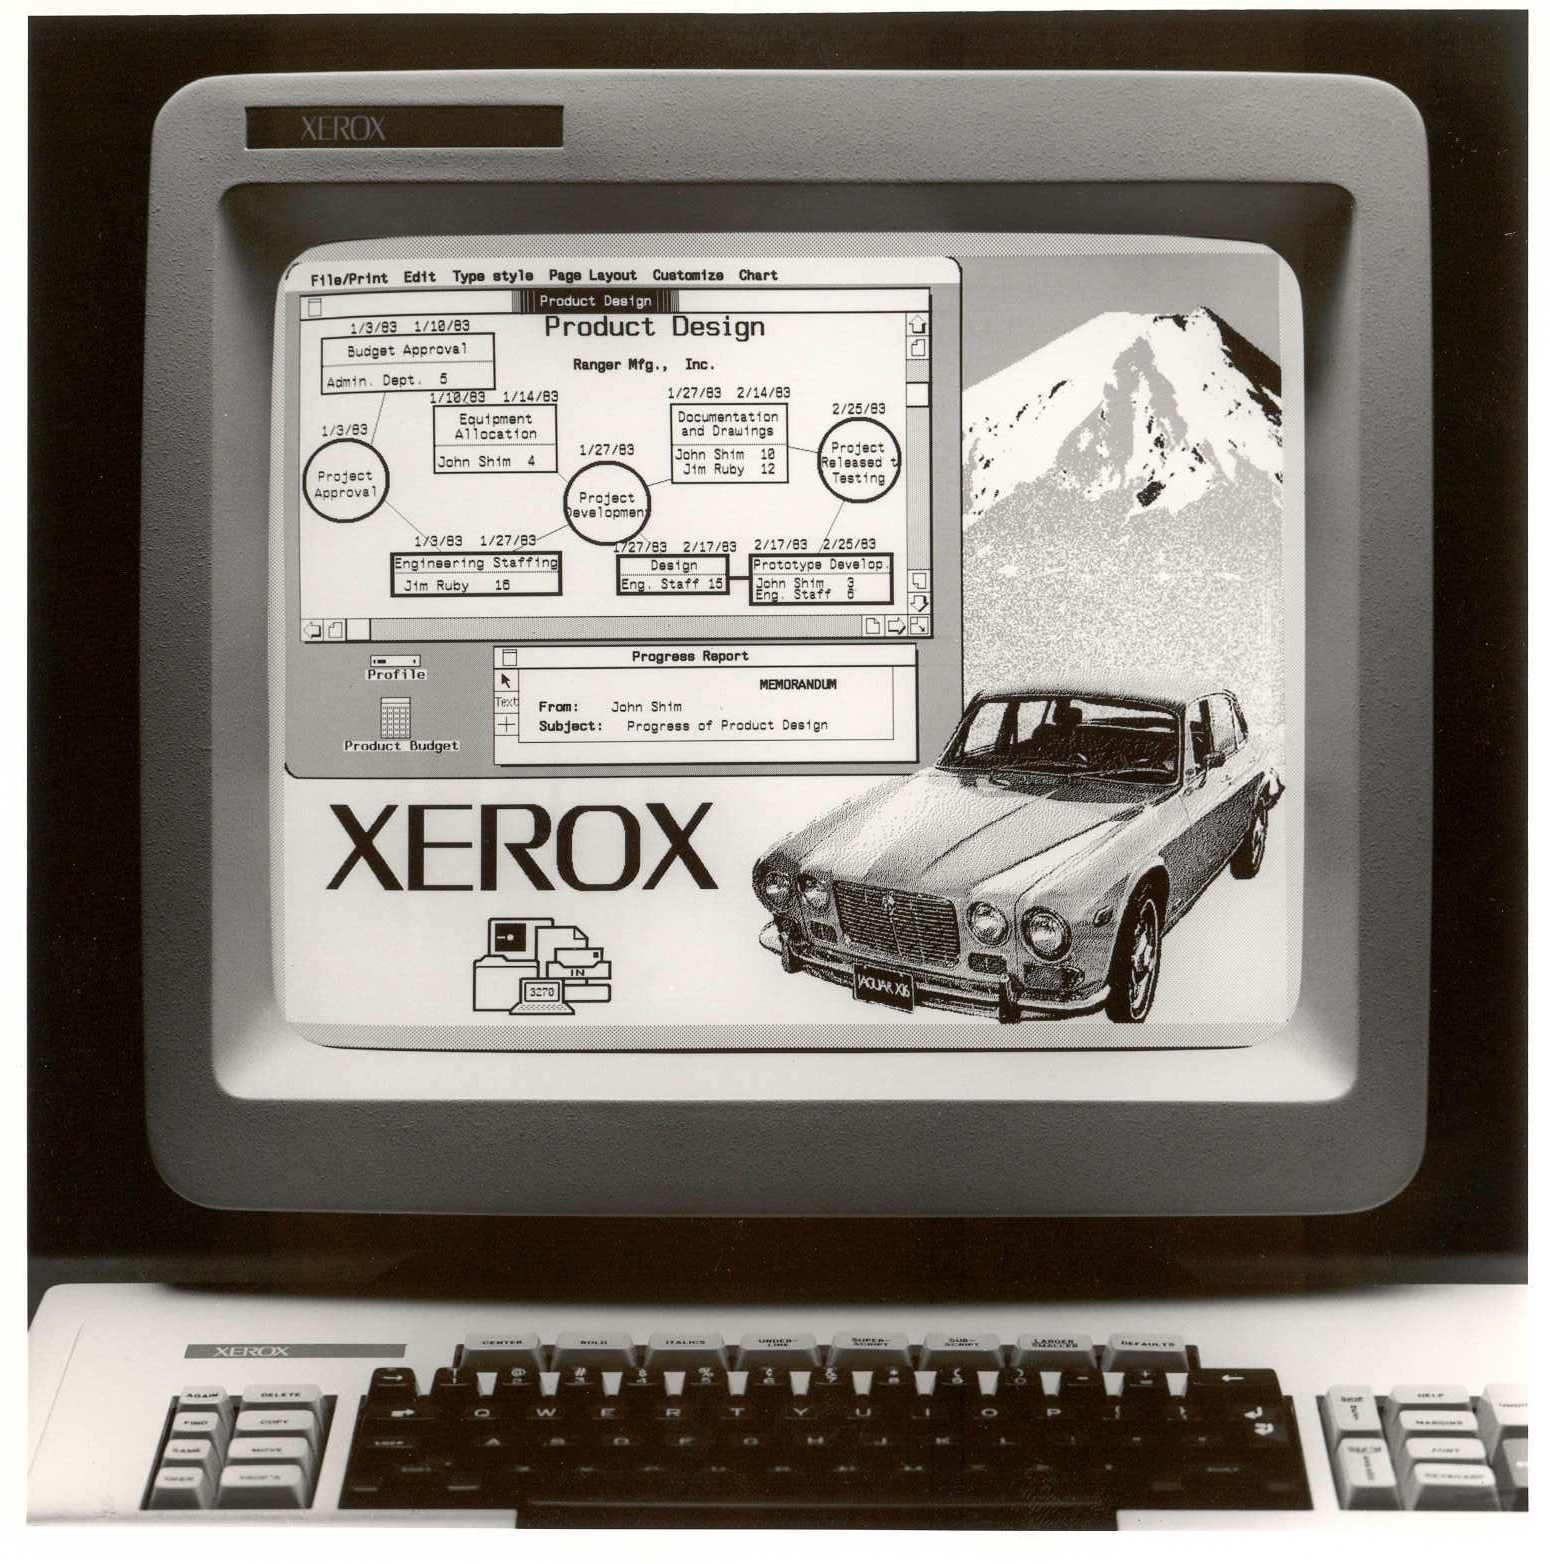 Xerox Star. Courtesy DigiBarn: http://www.digibarn.com/collections/screenshots/xerox-star-8010/